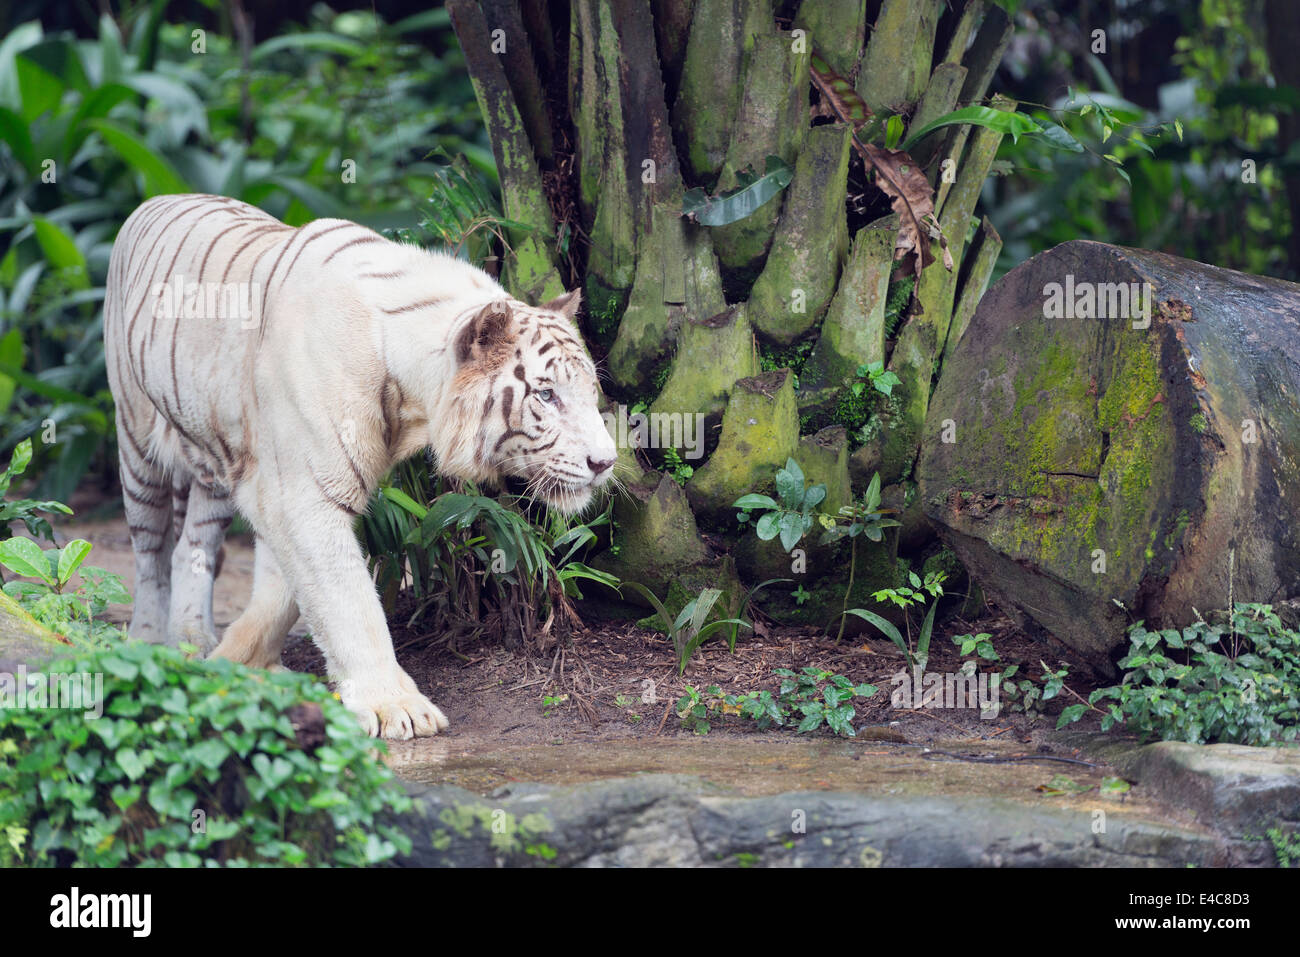 Il Sud Est asiatico, Singapore, Singapore Zoo, Panthera tigris tigris tigre bianca Foto Stock